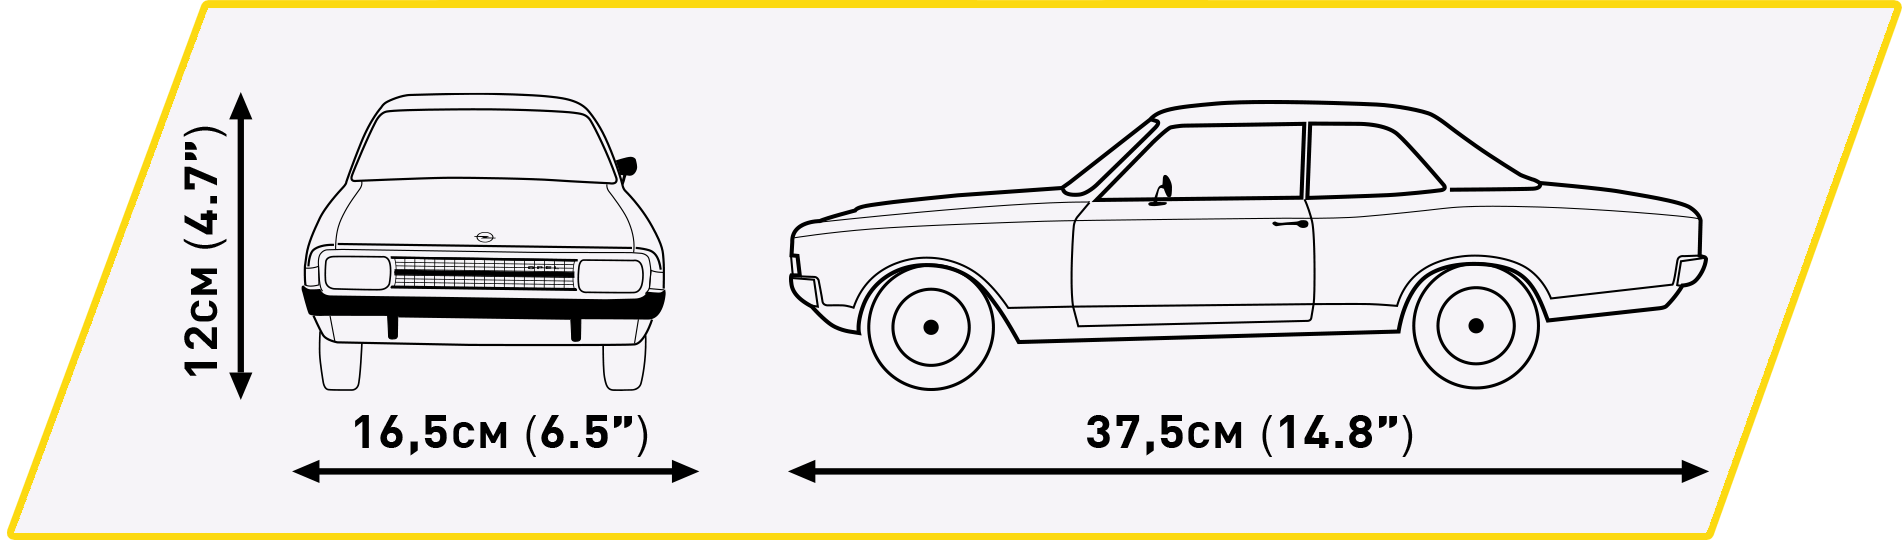 Automobil Opel RECORD C coupé COBI 24344 - Executive Edition 1:12